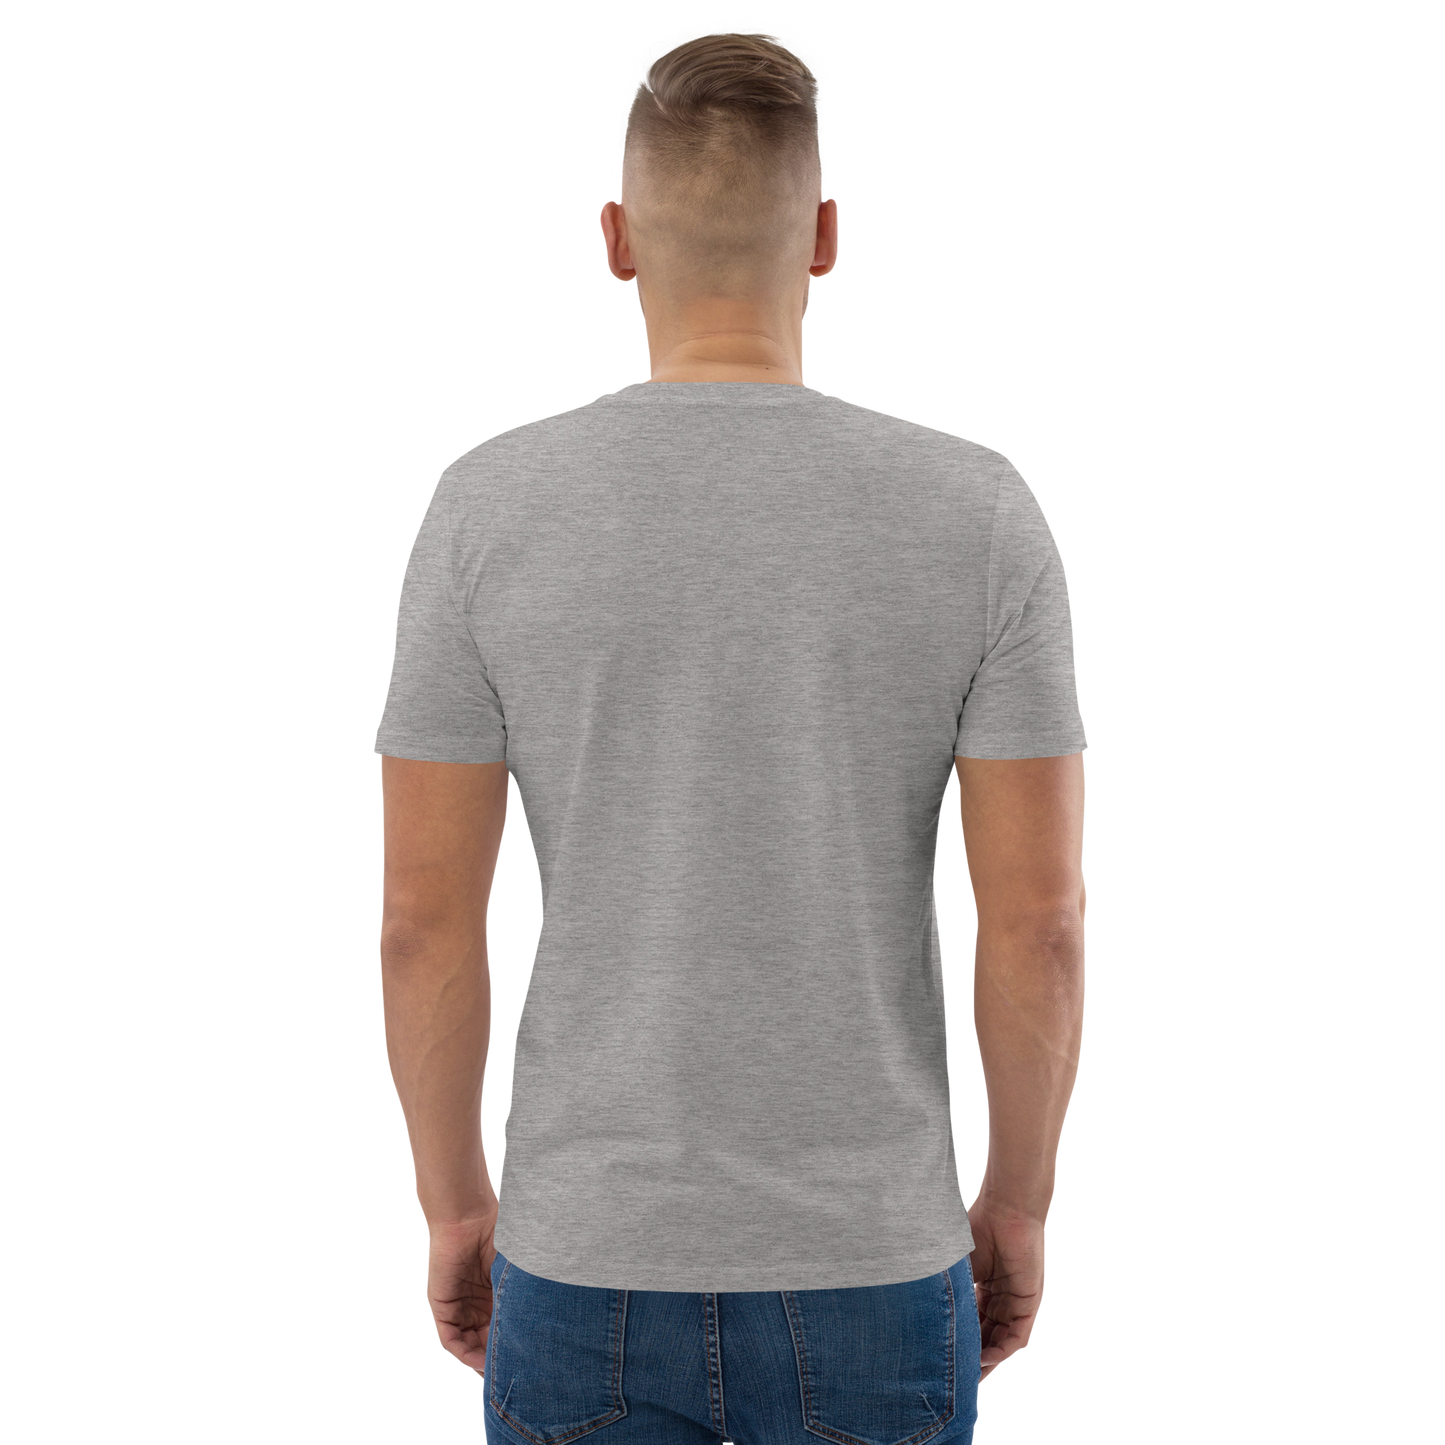 T-shirt chrétien imprimé en coton bio - F.O.F